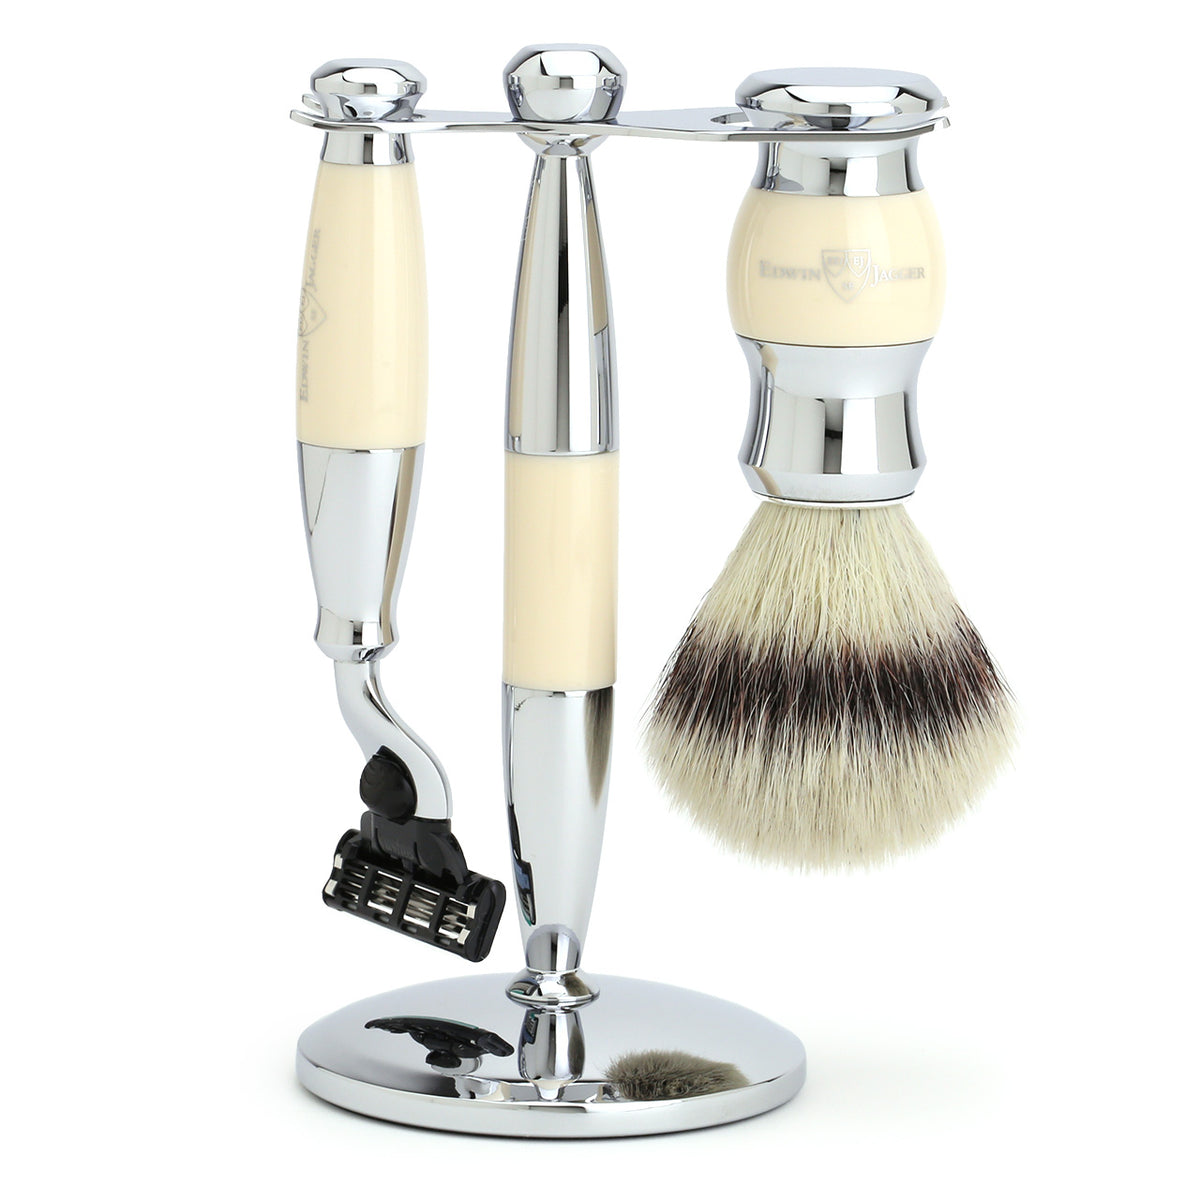 Edwin Jagger Shaving Set with Mach3 Razor, Shaving Brush &amp; Stand - Imitation Ivory